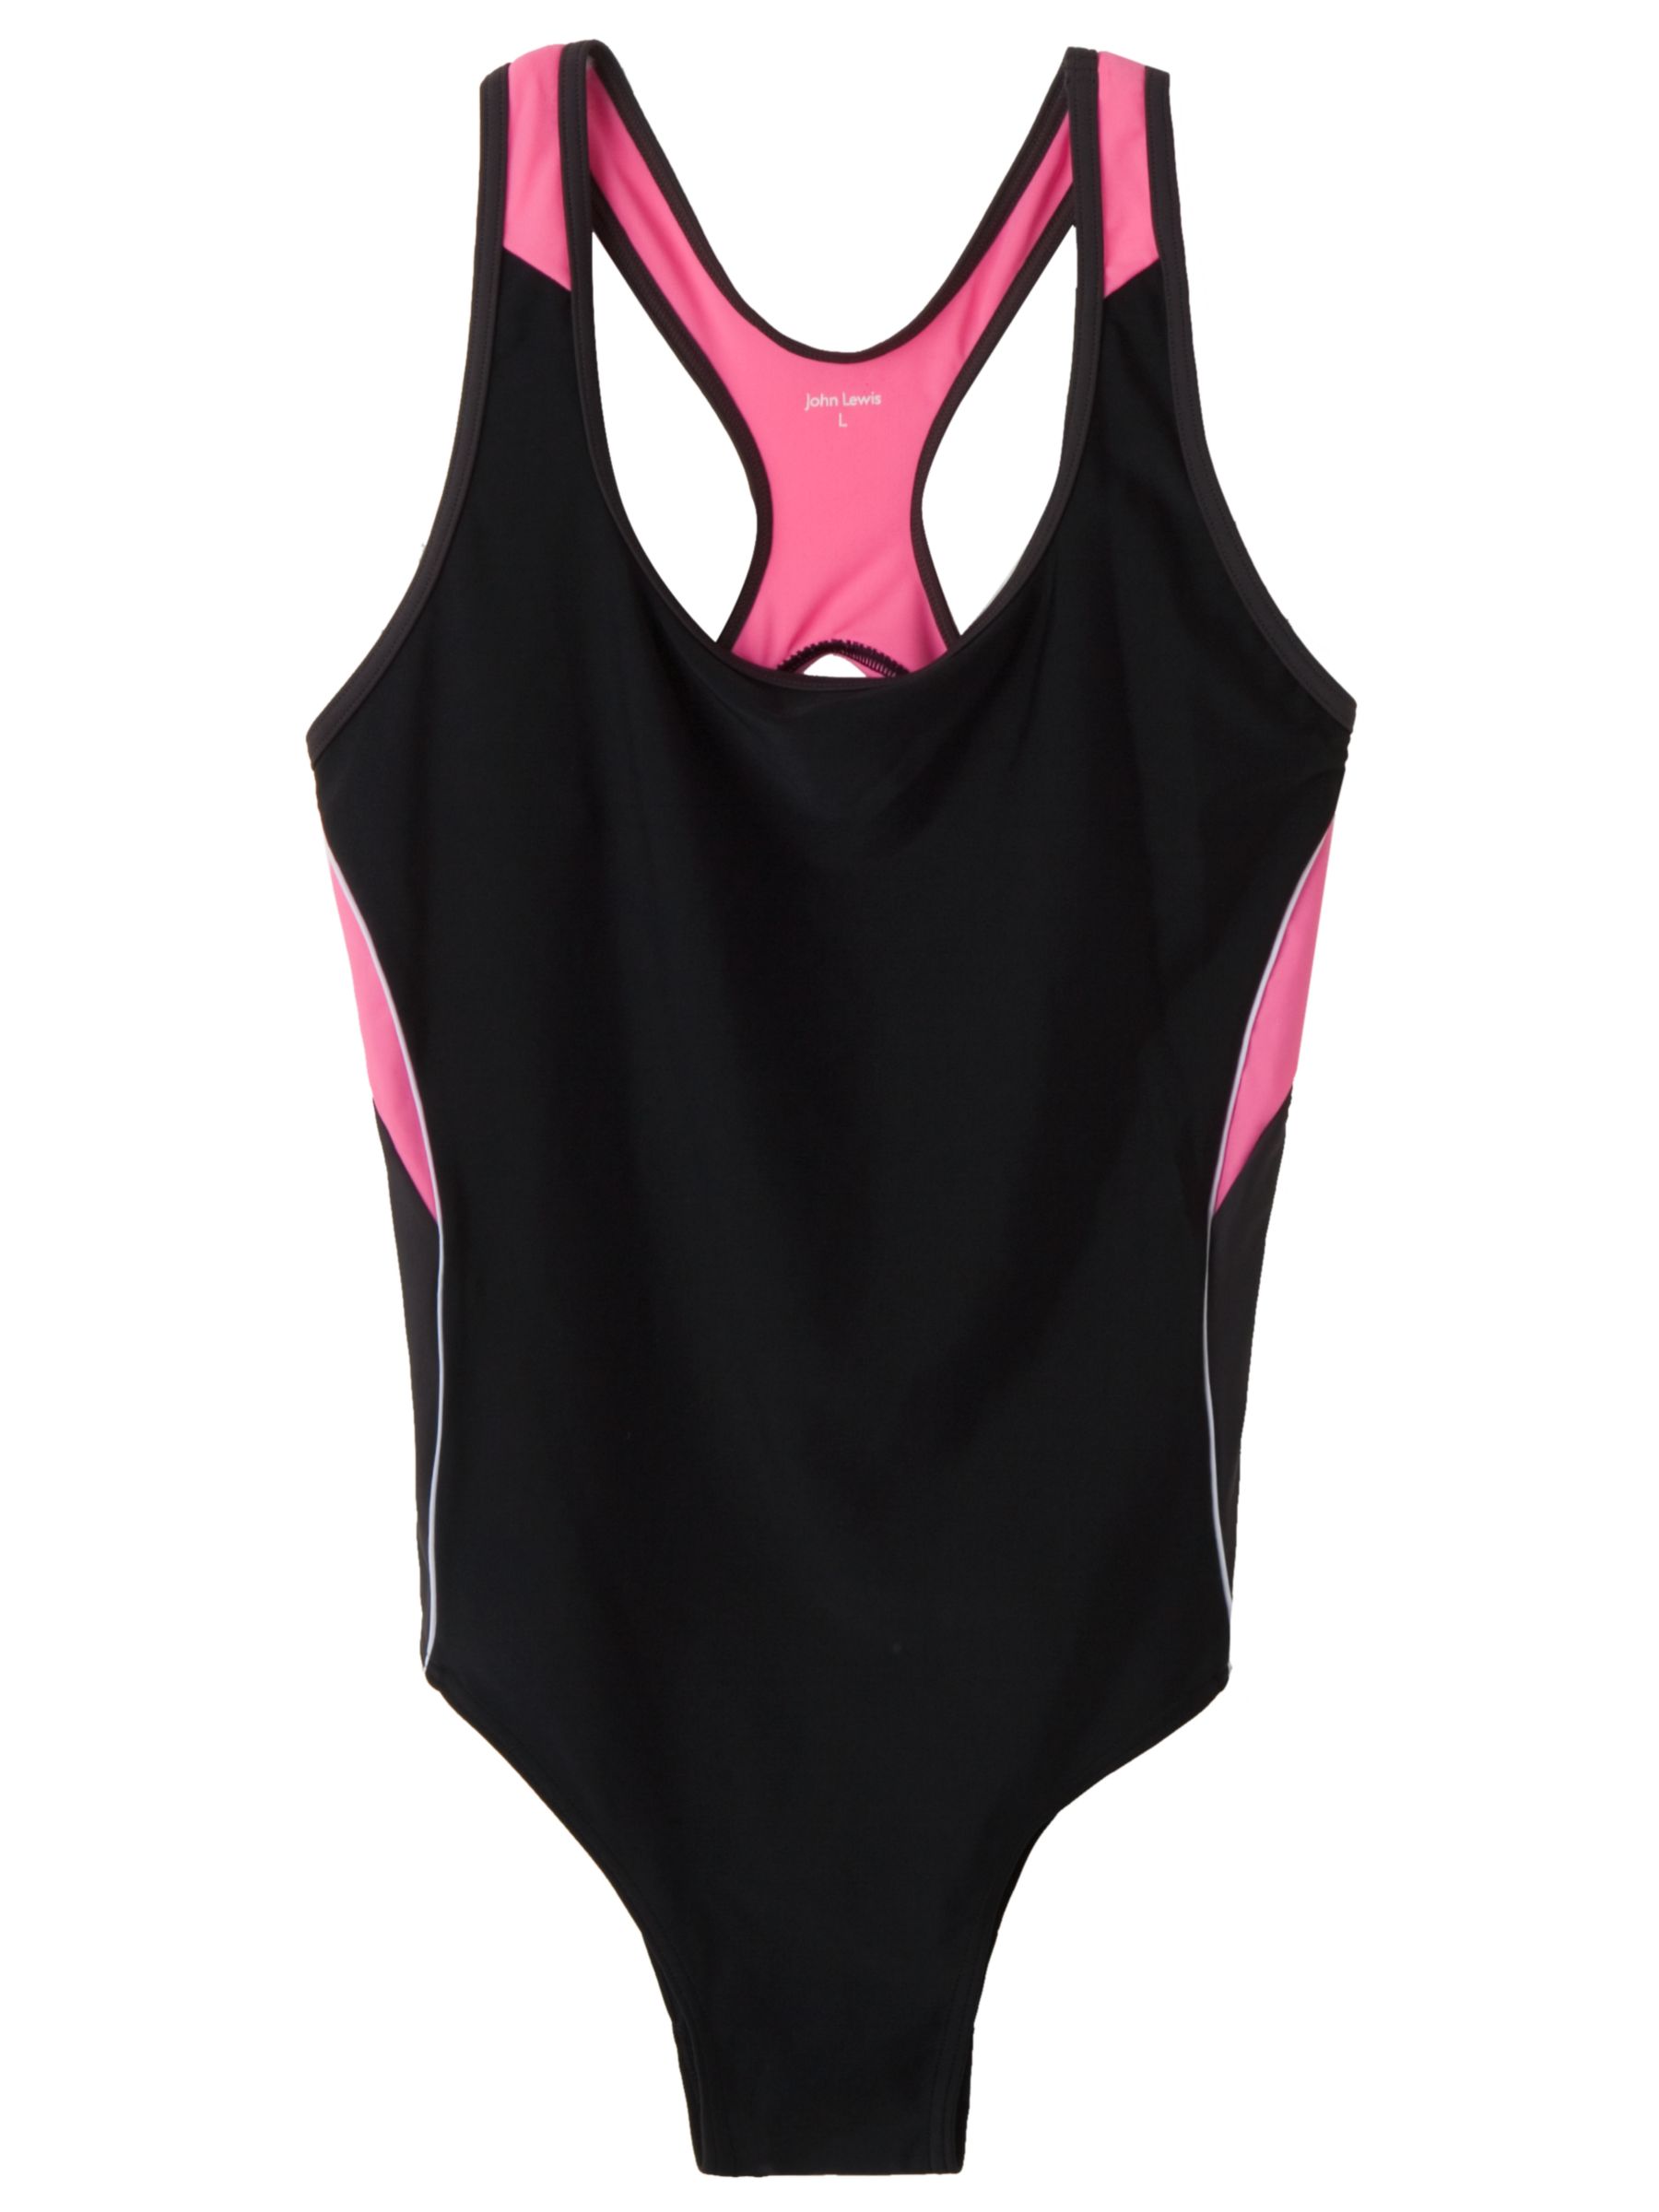 John Lewis Racer Back Swimsuit, Black/Pink, XXL